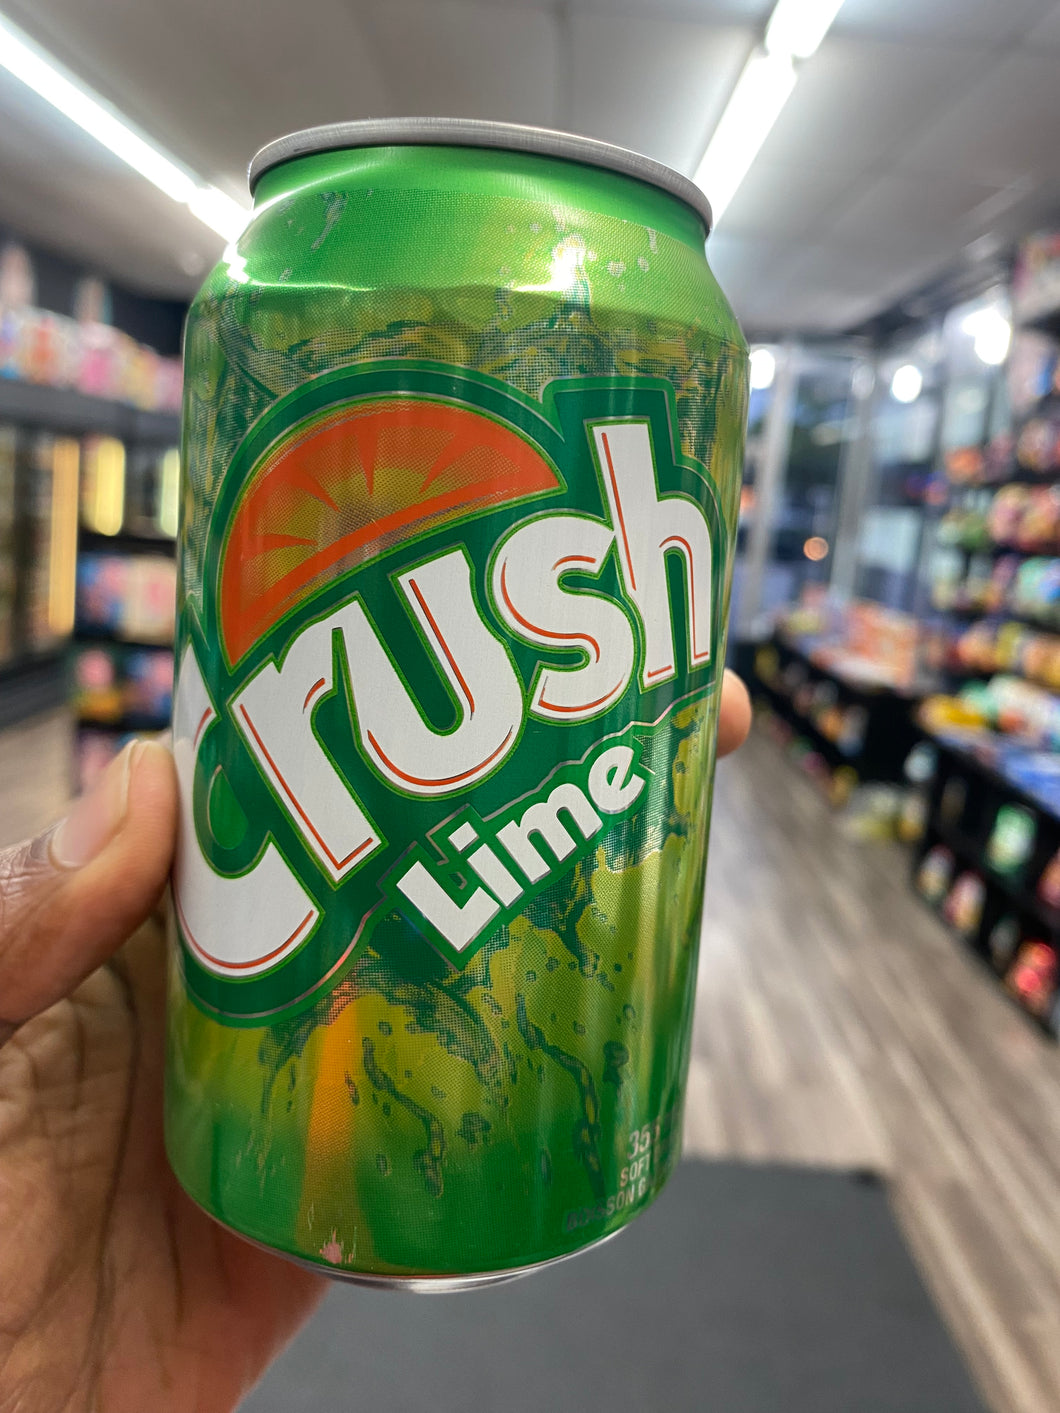 Crush Lime (Canada)